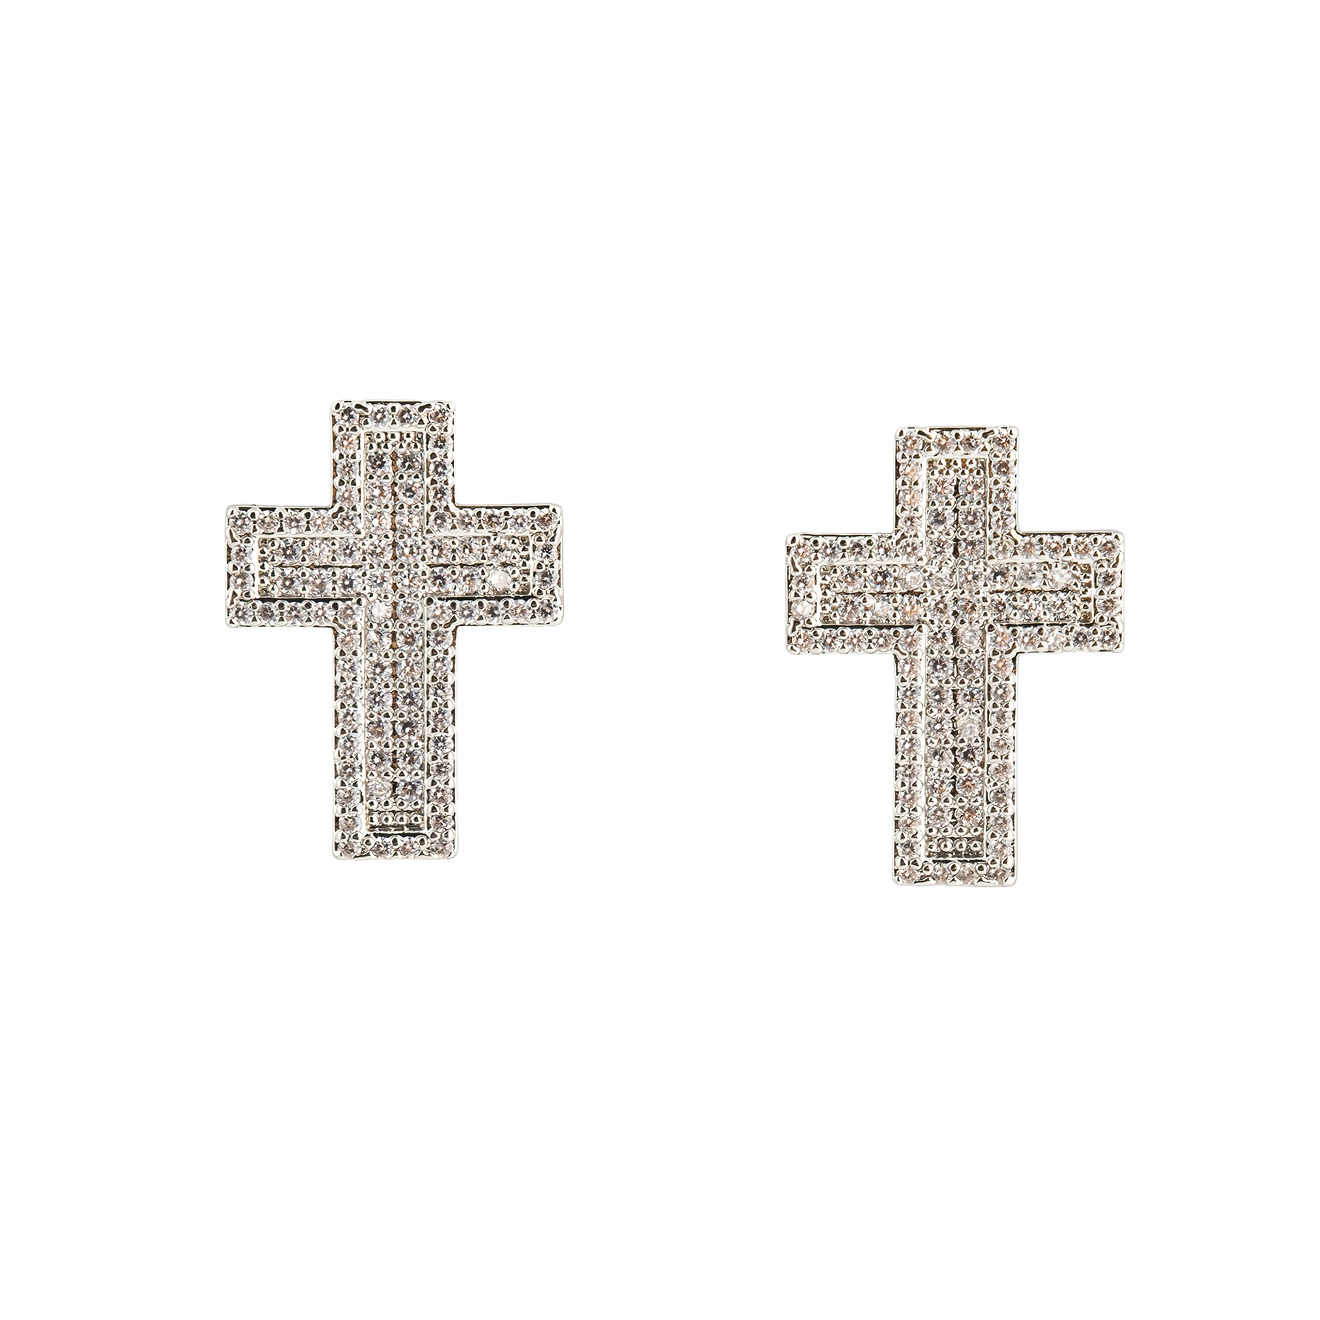 Herald Percy Серебристые серьги-кресты с кристалами herald percy серебристые серьги кресты с кристаллами